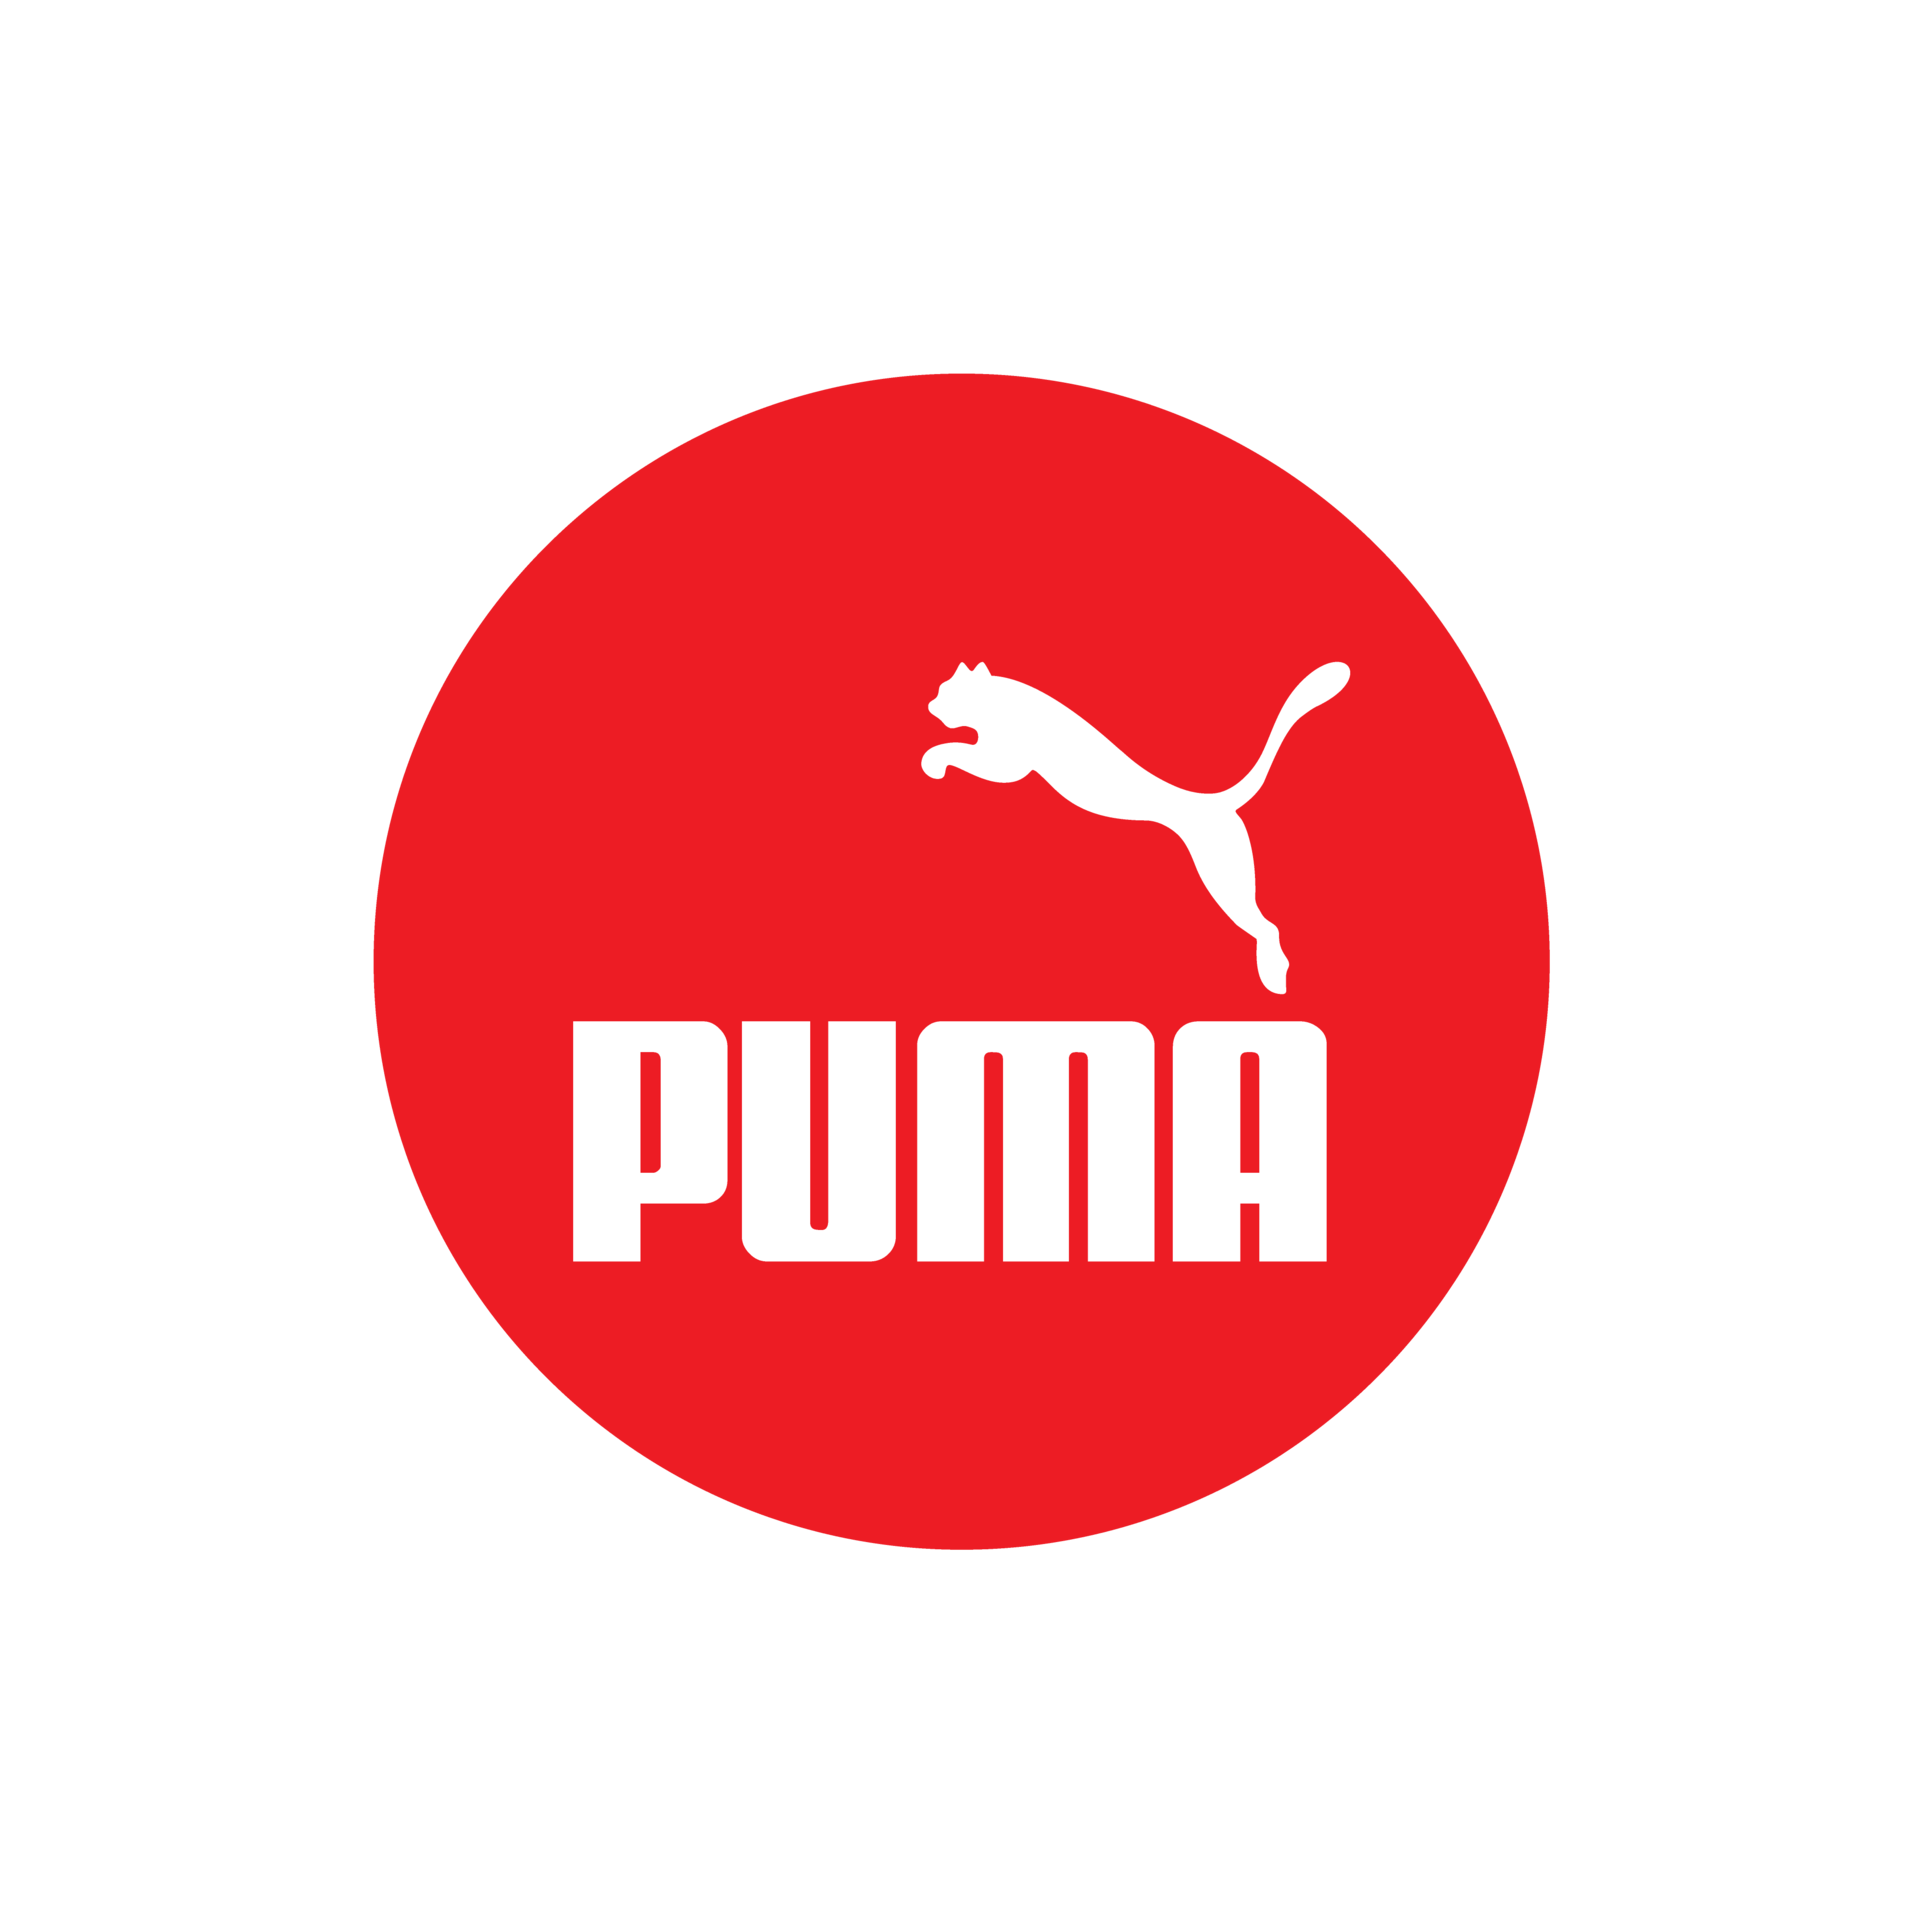 Puma Logo PNG Transparent & SVG Vector - Freebie Supply